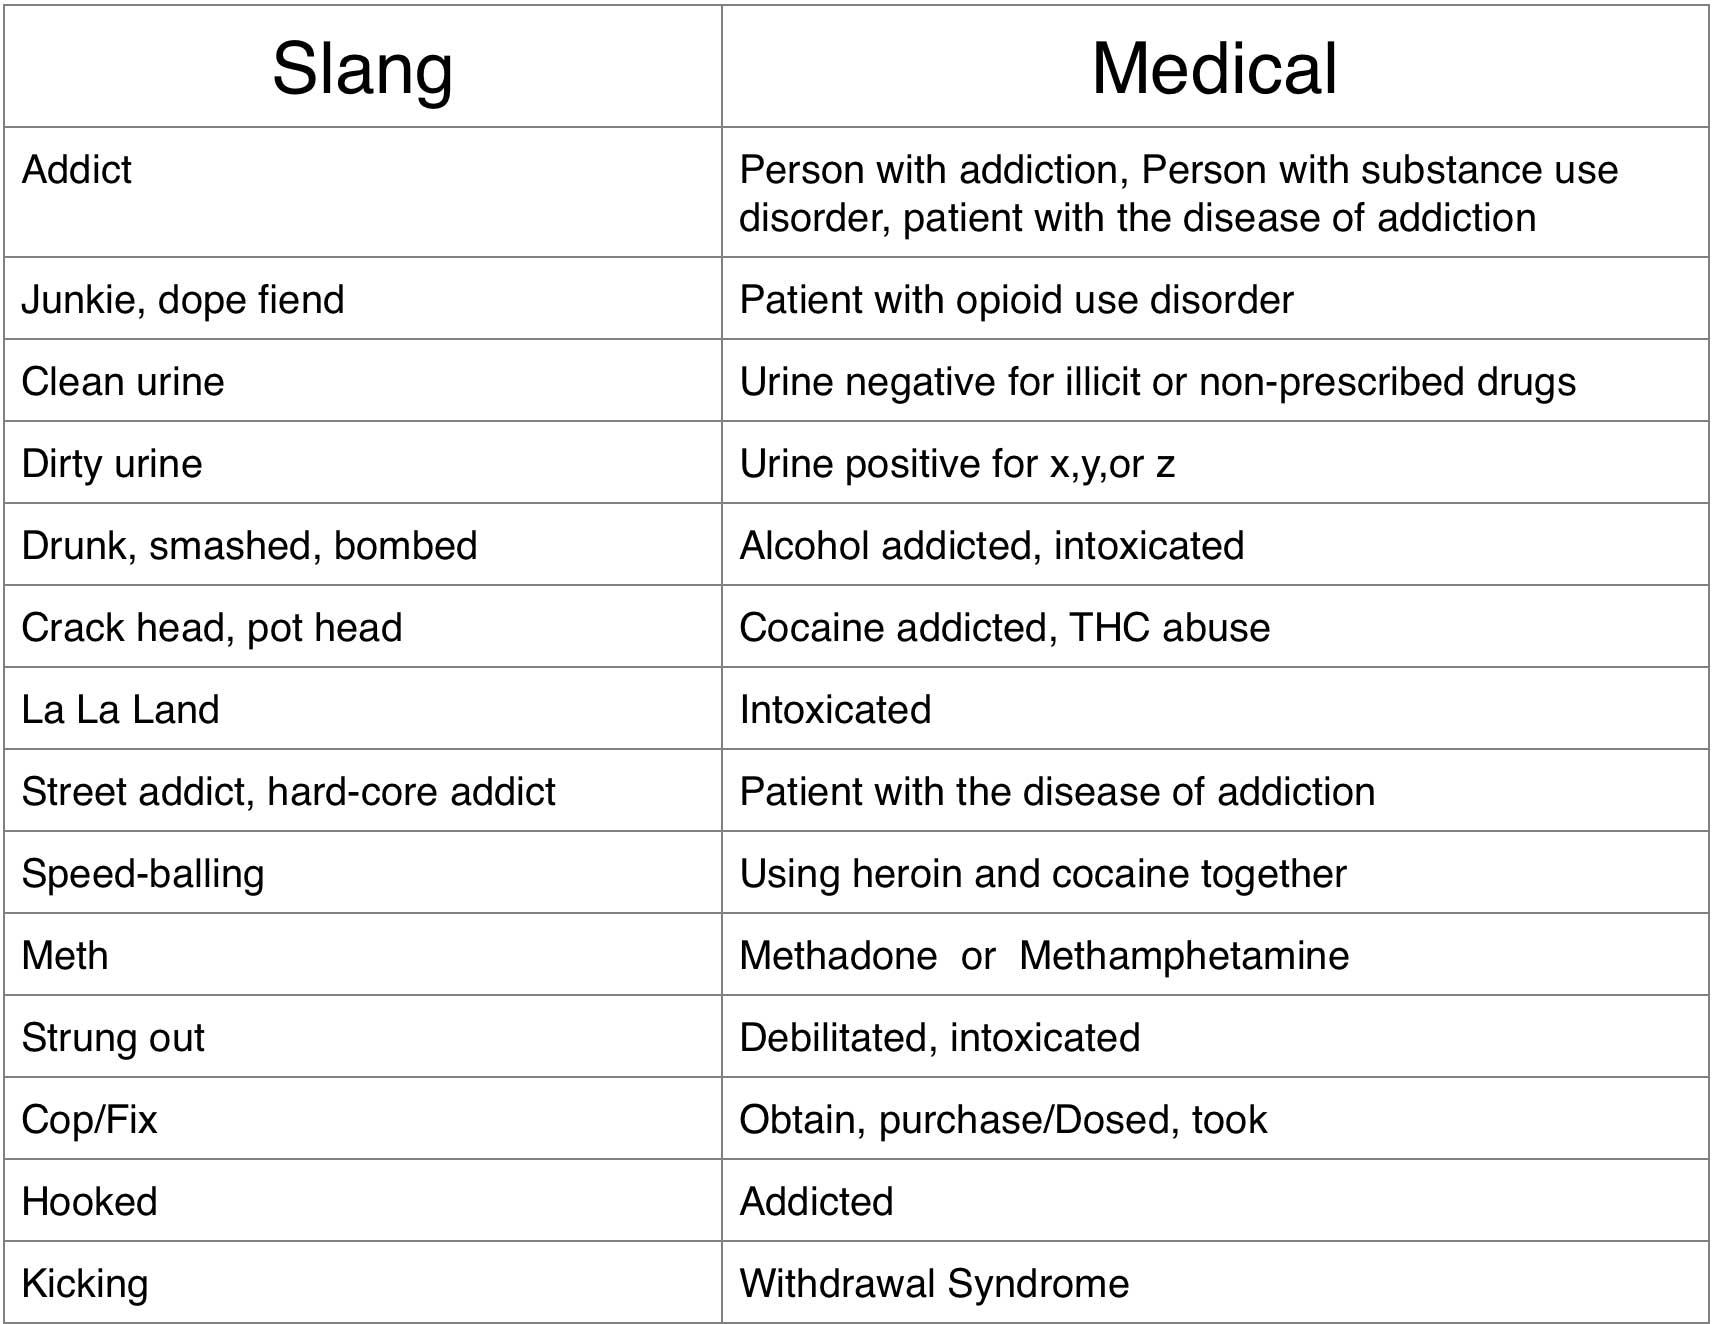 slang terms vs medical terms